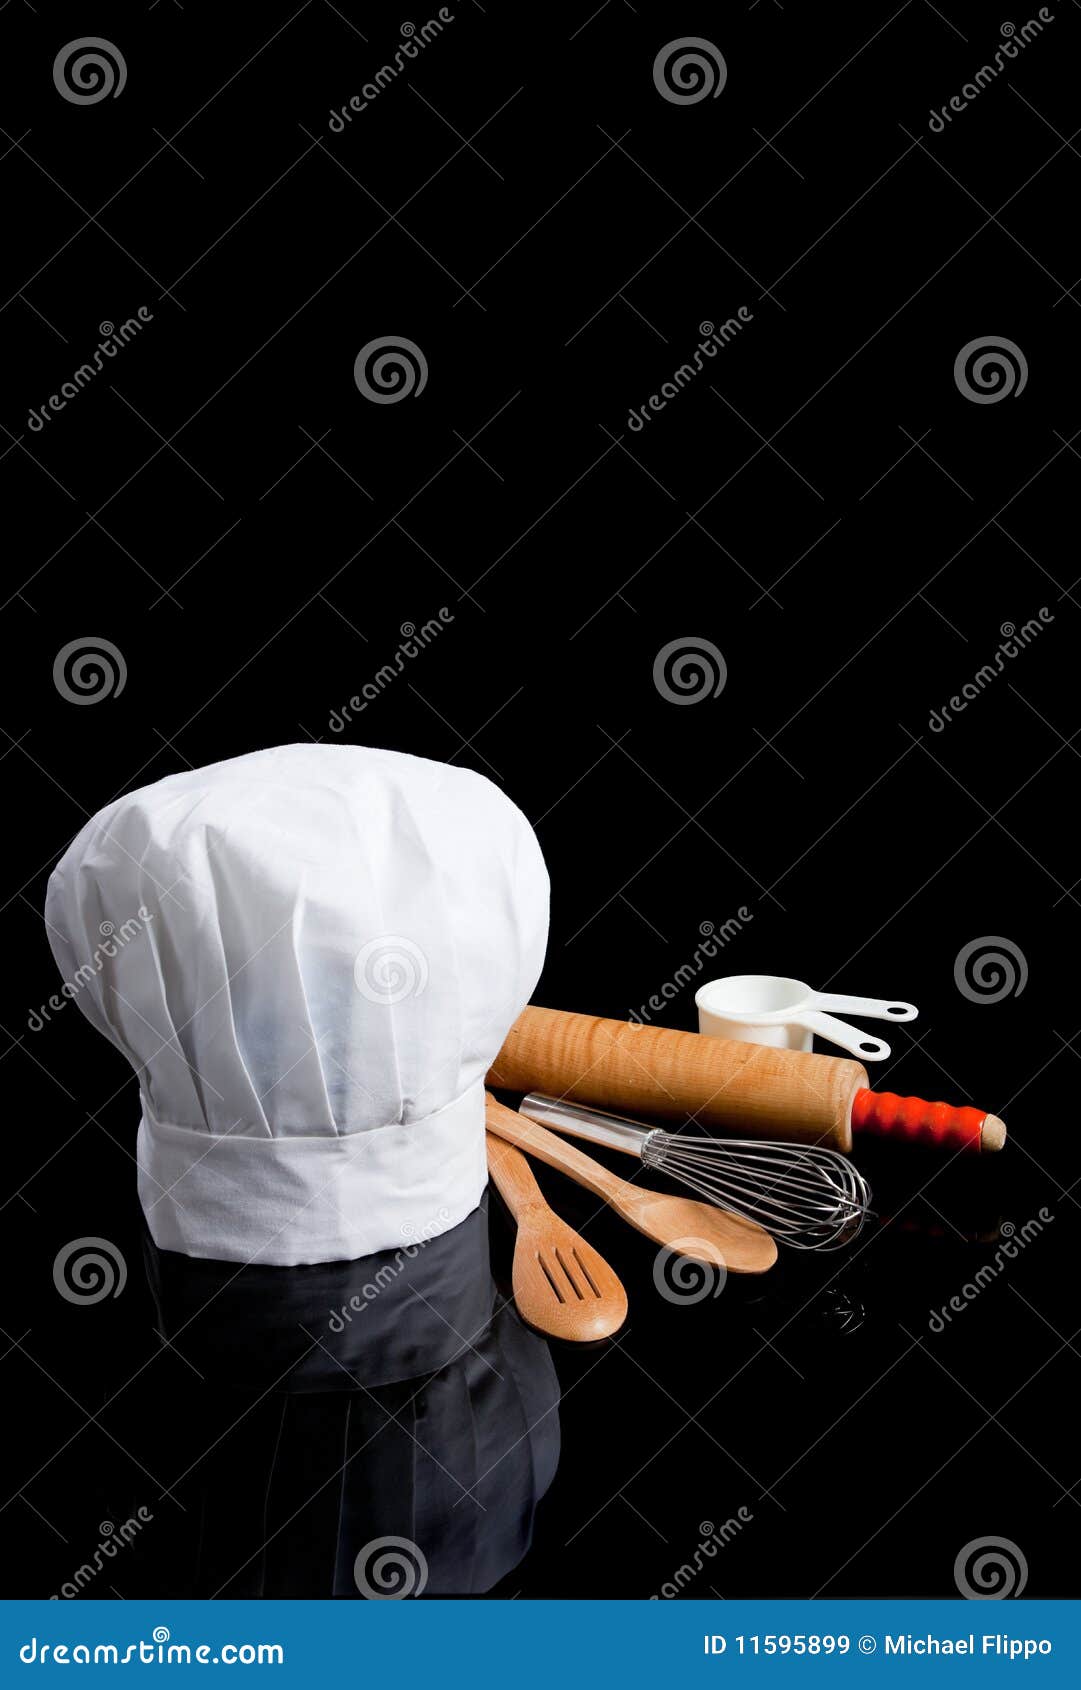 a chef's toque with kitchen utensils on black